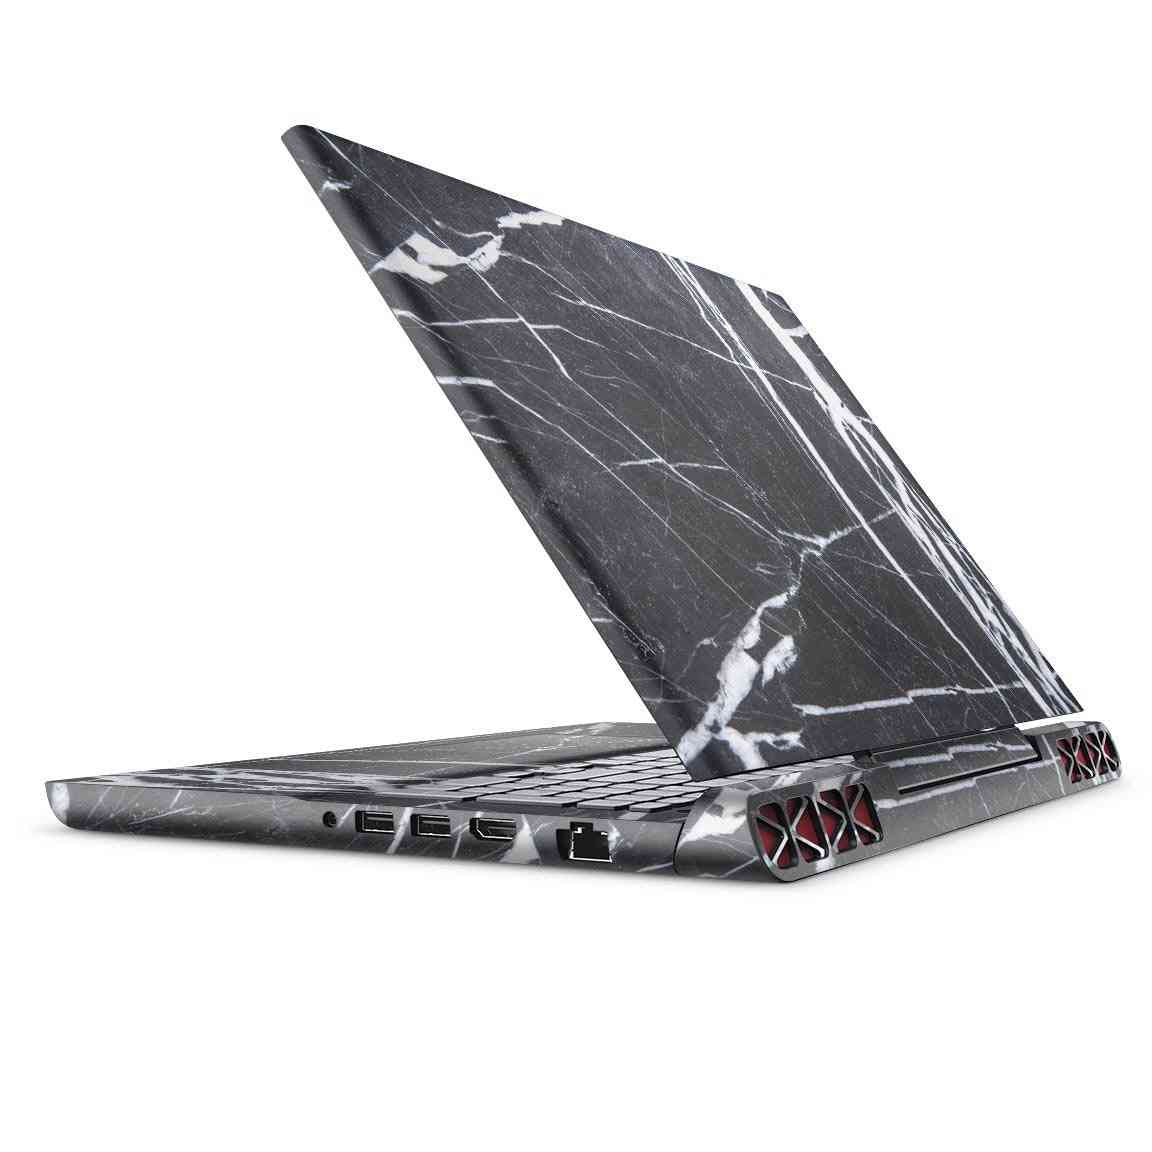 Natural Black & White Marble Stone - Full Body Skin Decal For Laptops